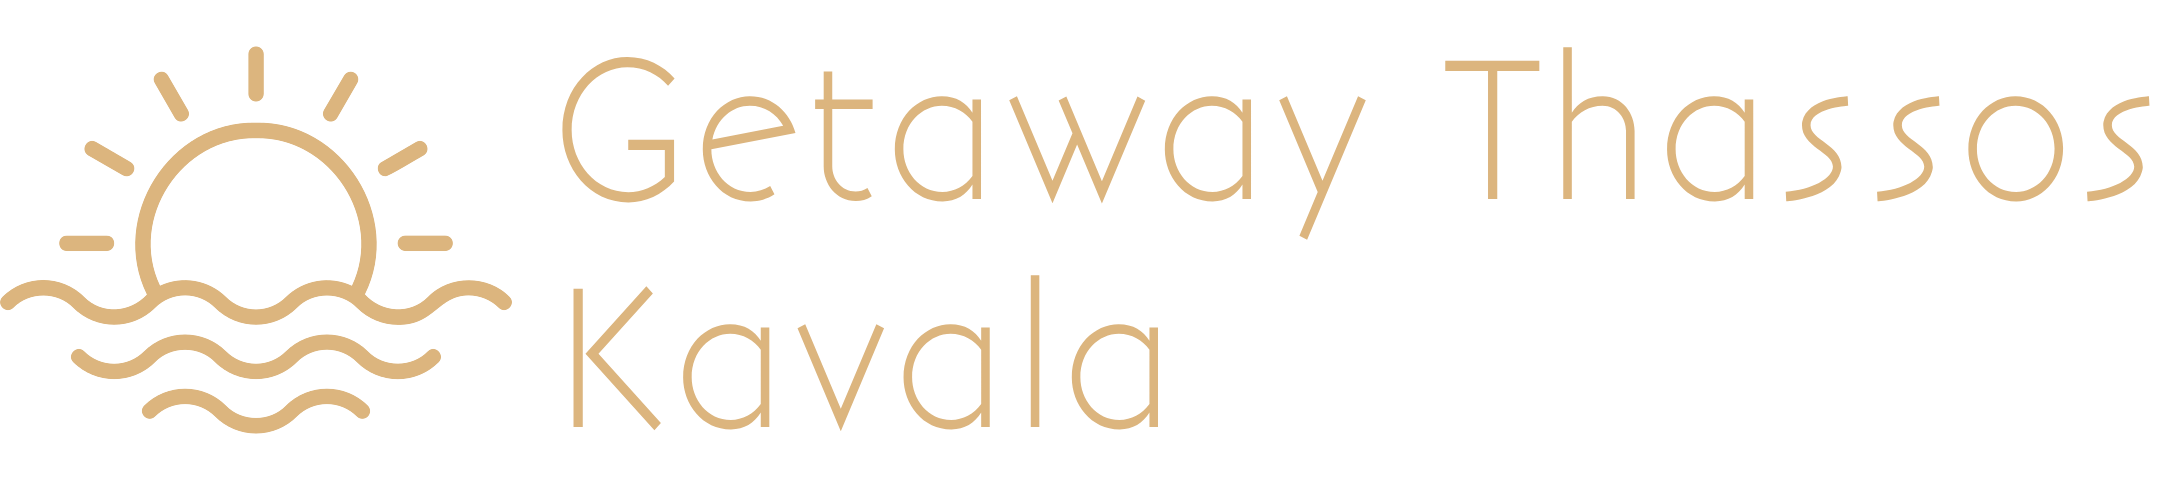 Getaway Thassos Kavala | Flat-screen TV Archives - Getaway Thassos Kavala